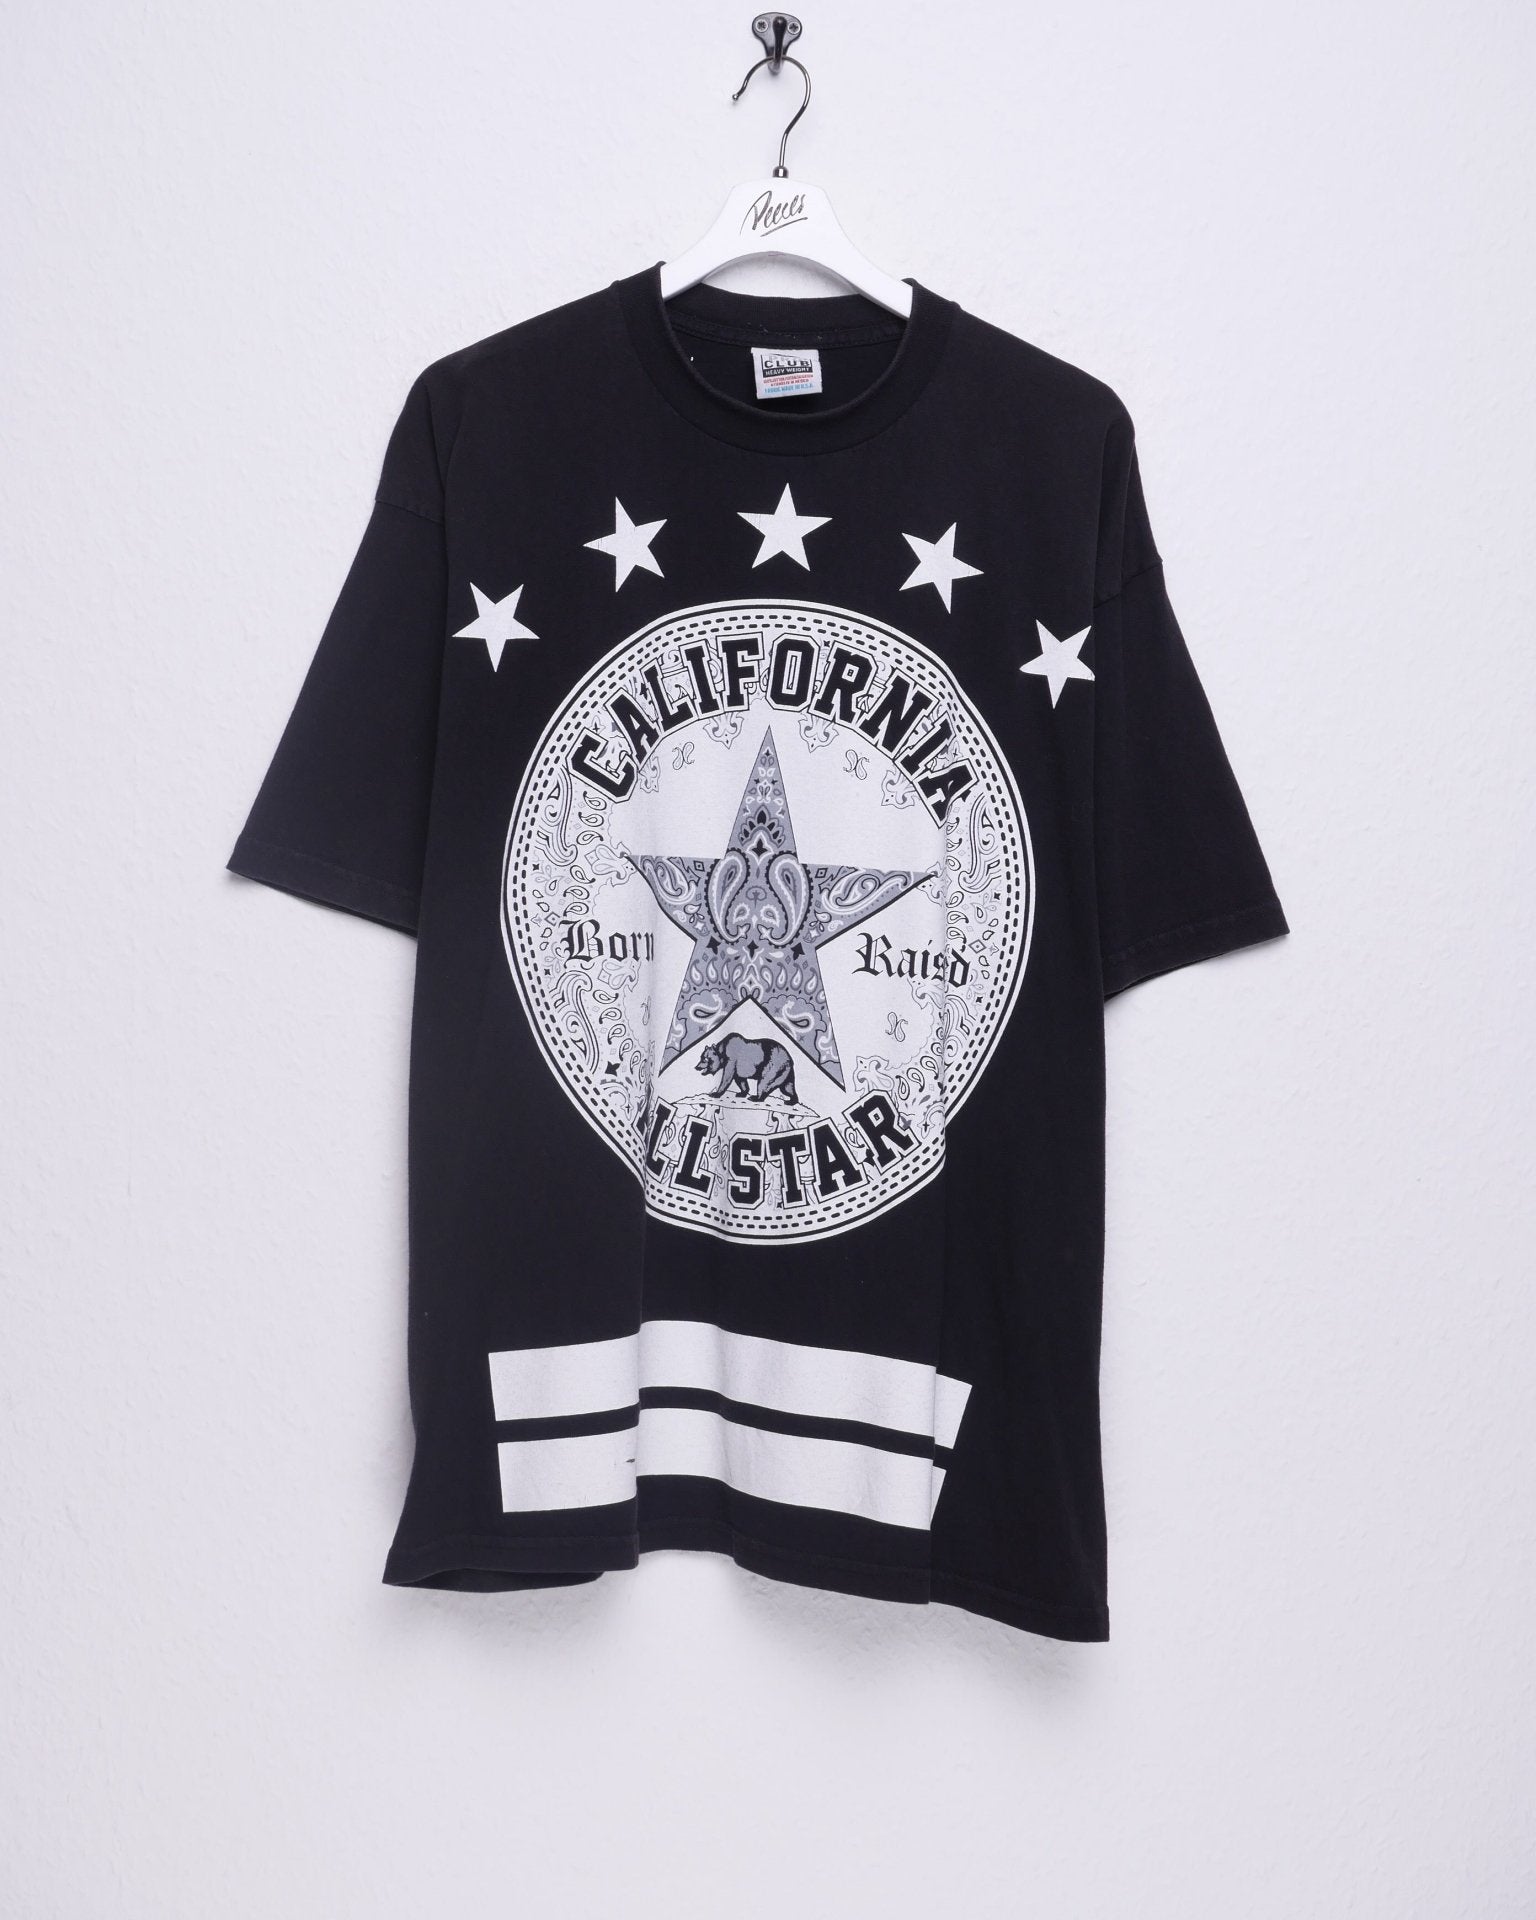 'California All Stars' printed Graphic black Shirt - Peeces